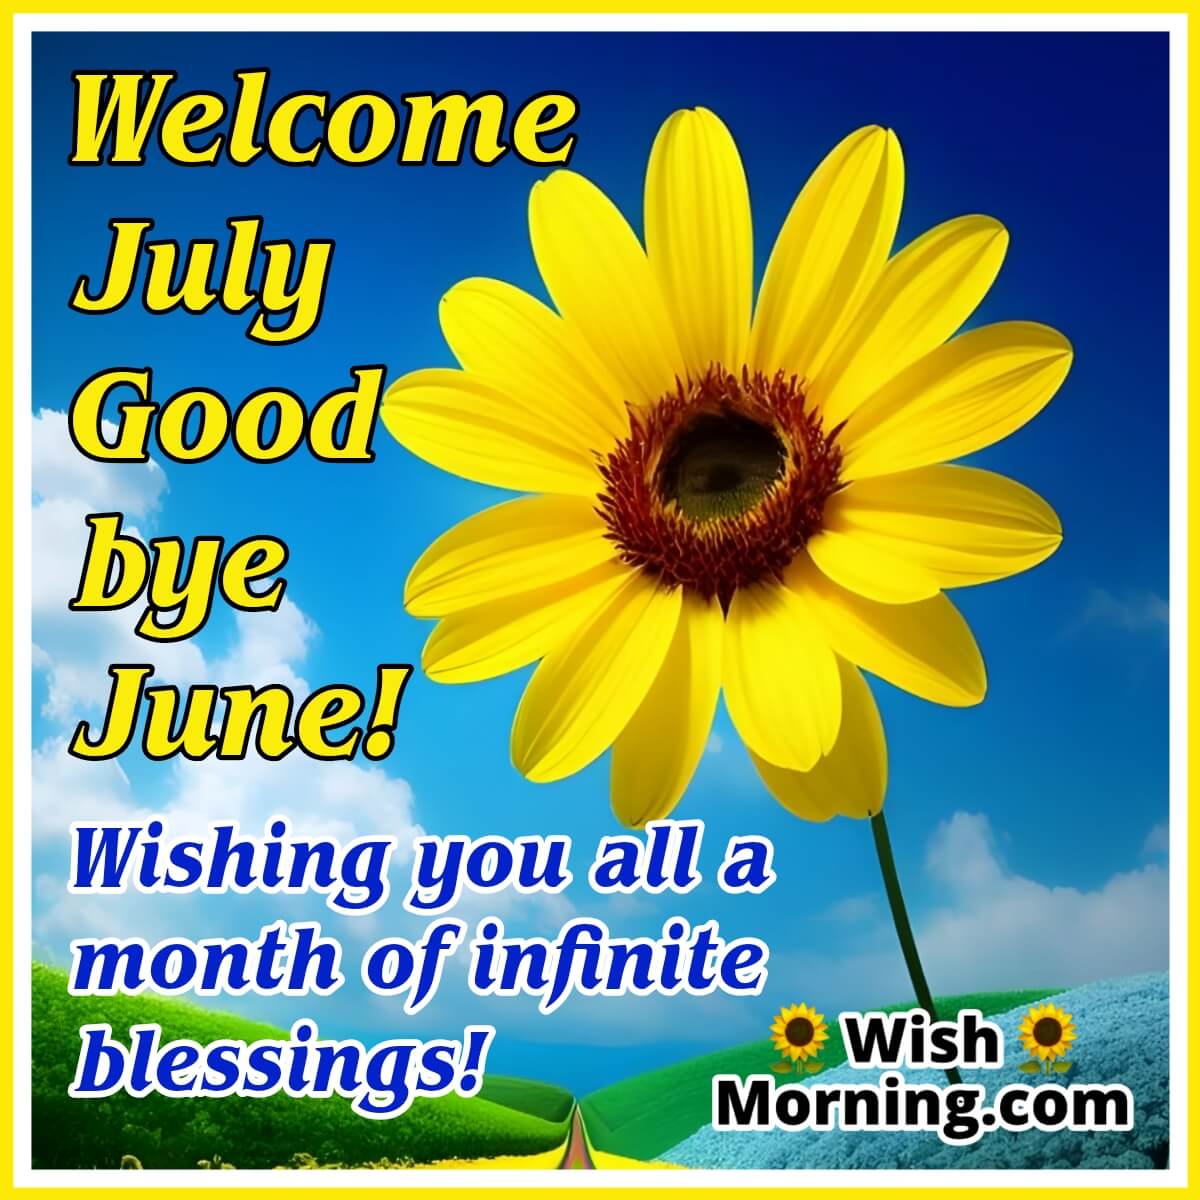 Welcome July Good Bye June Wish